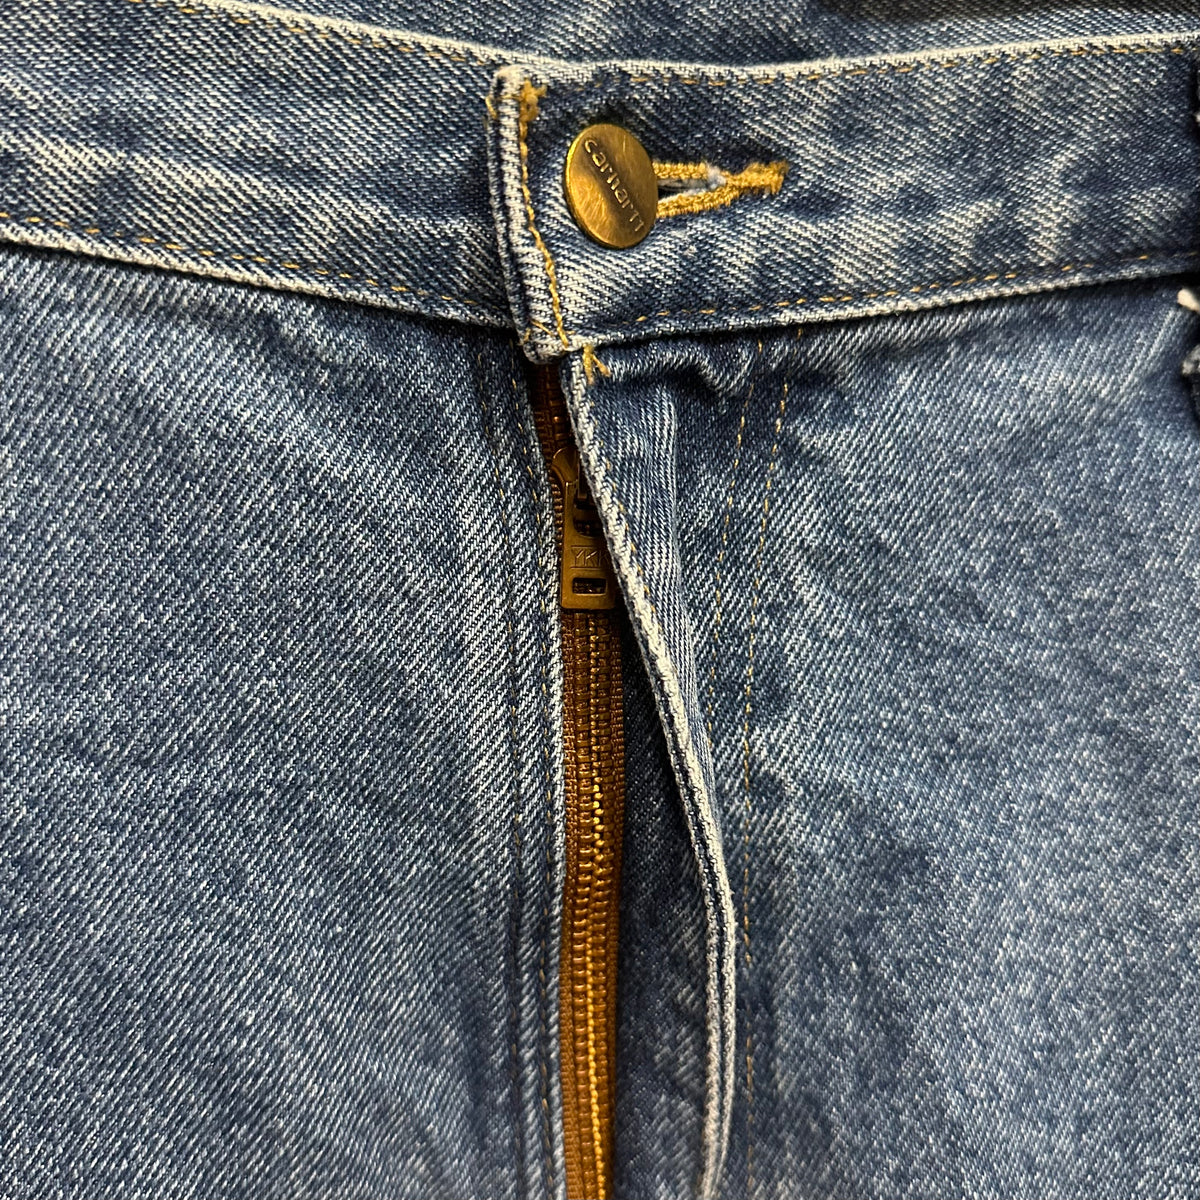 Carhartt Men’s Carpenter Blue Jeans B13 Original Fit